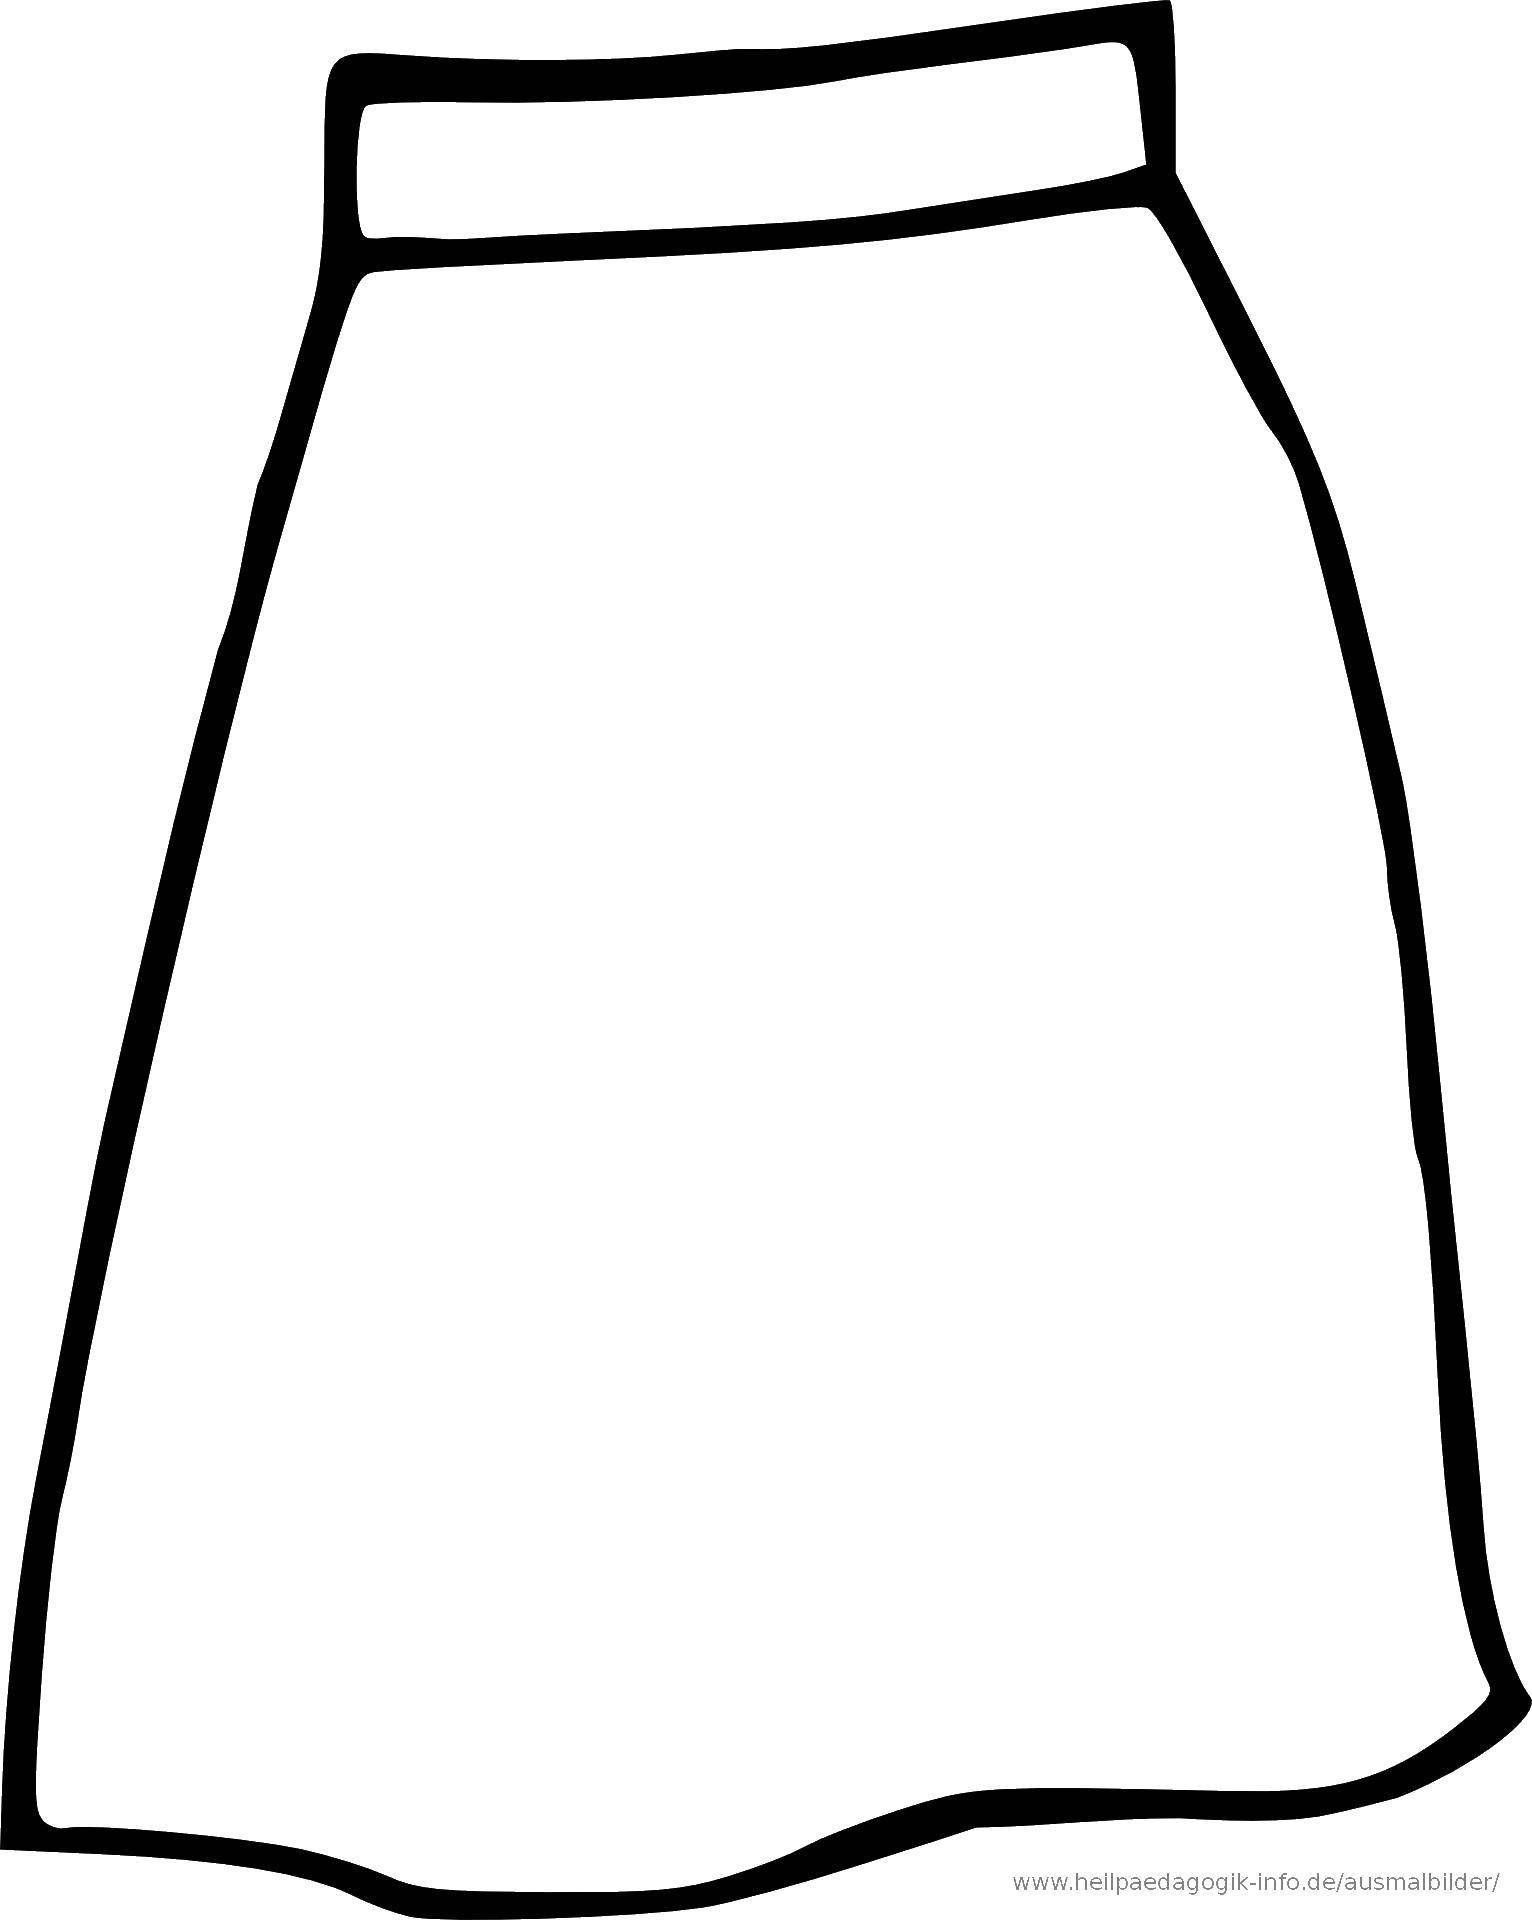 Название: Раскраска Прямая юбка. Категория: юбка. Теги: одежда, юбка.